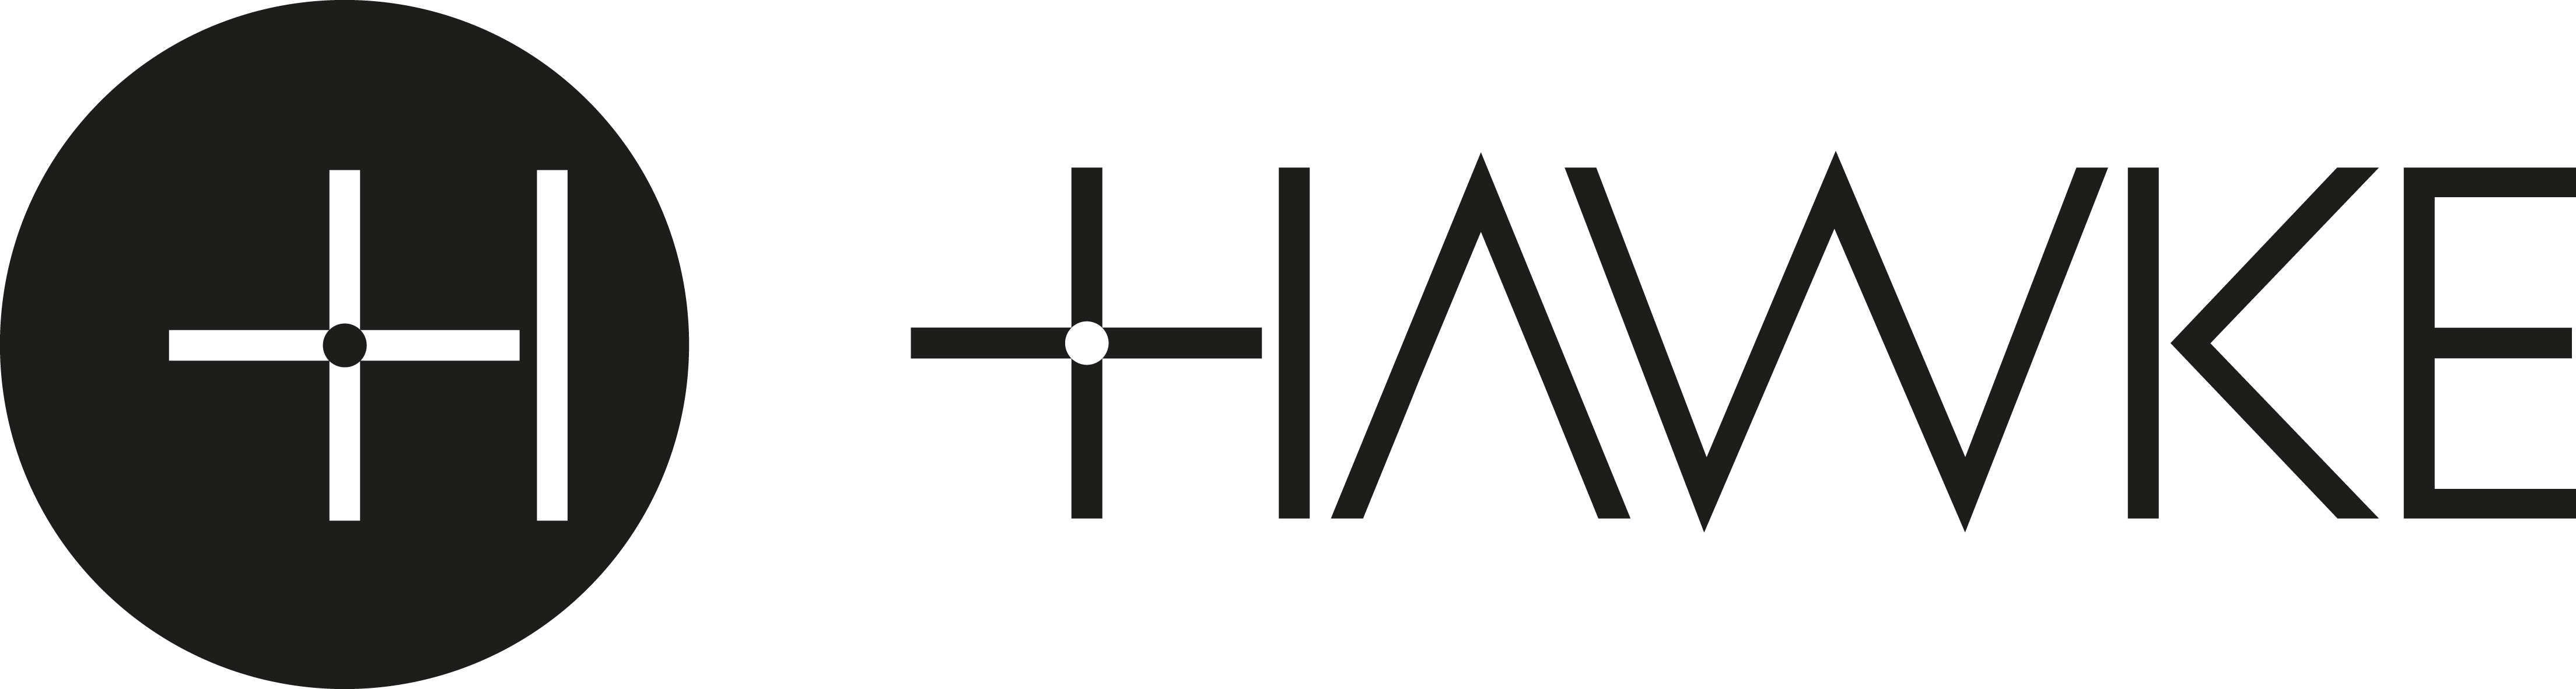 Hawke Optics Brand